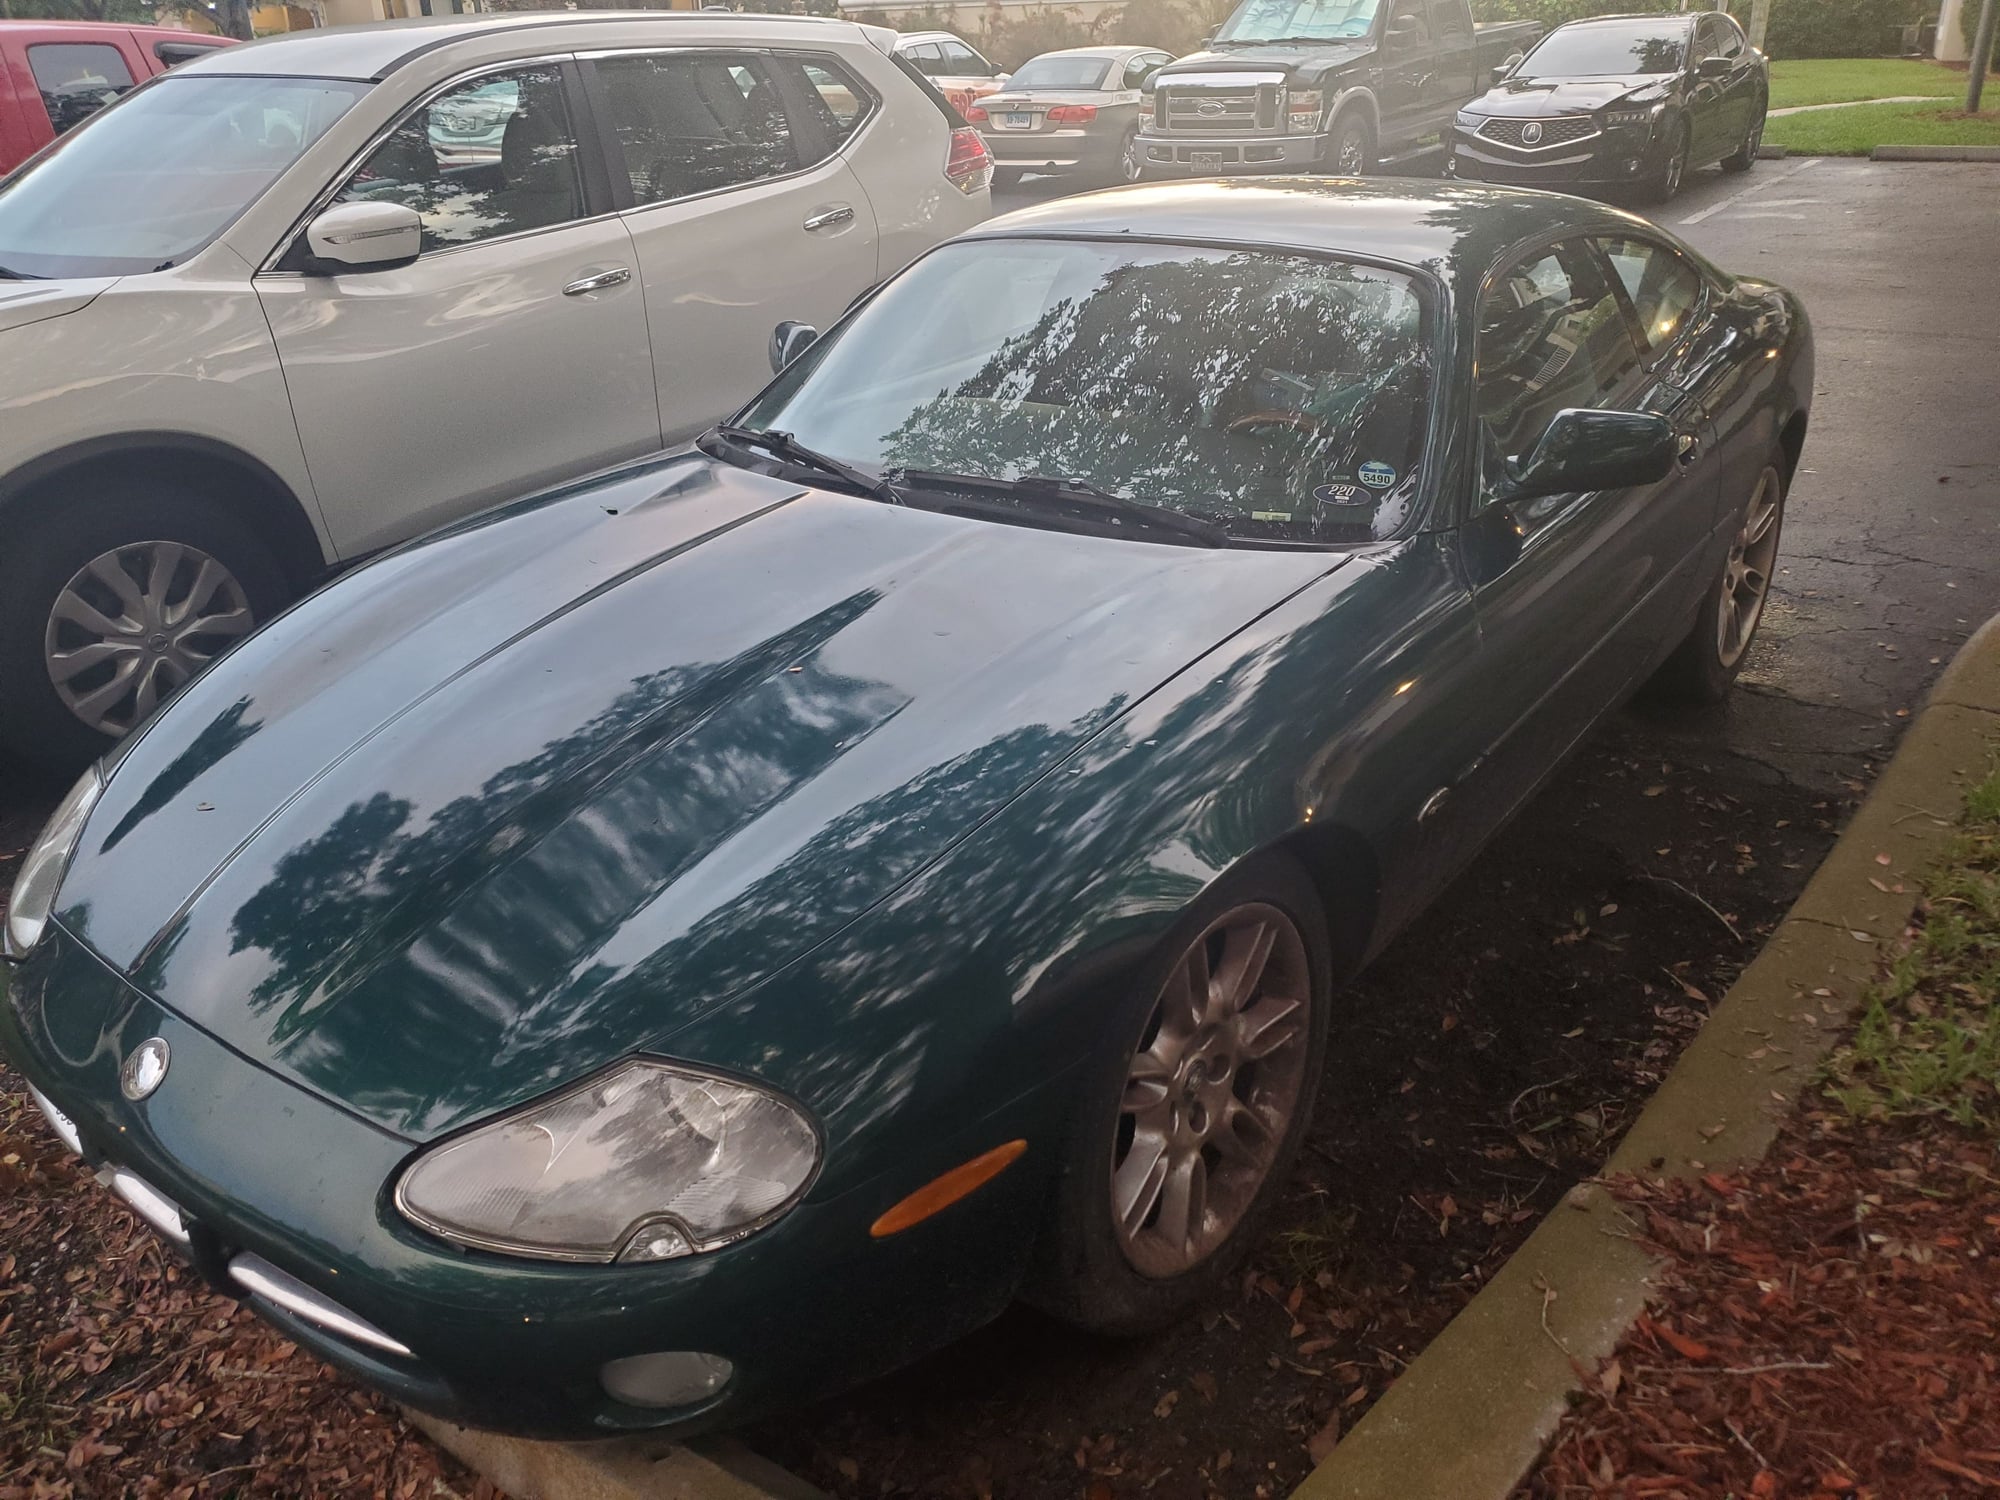 2001 Jaguar XK8 - Needs a new home... - Used - VIN SAJDA41C41NA13986 - 187,000 Miles - 8 cyl - 2WD - Automatic - Sedan - Other - Sarasota, FL 34238, United States